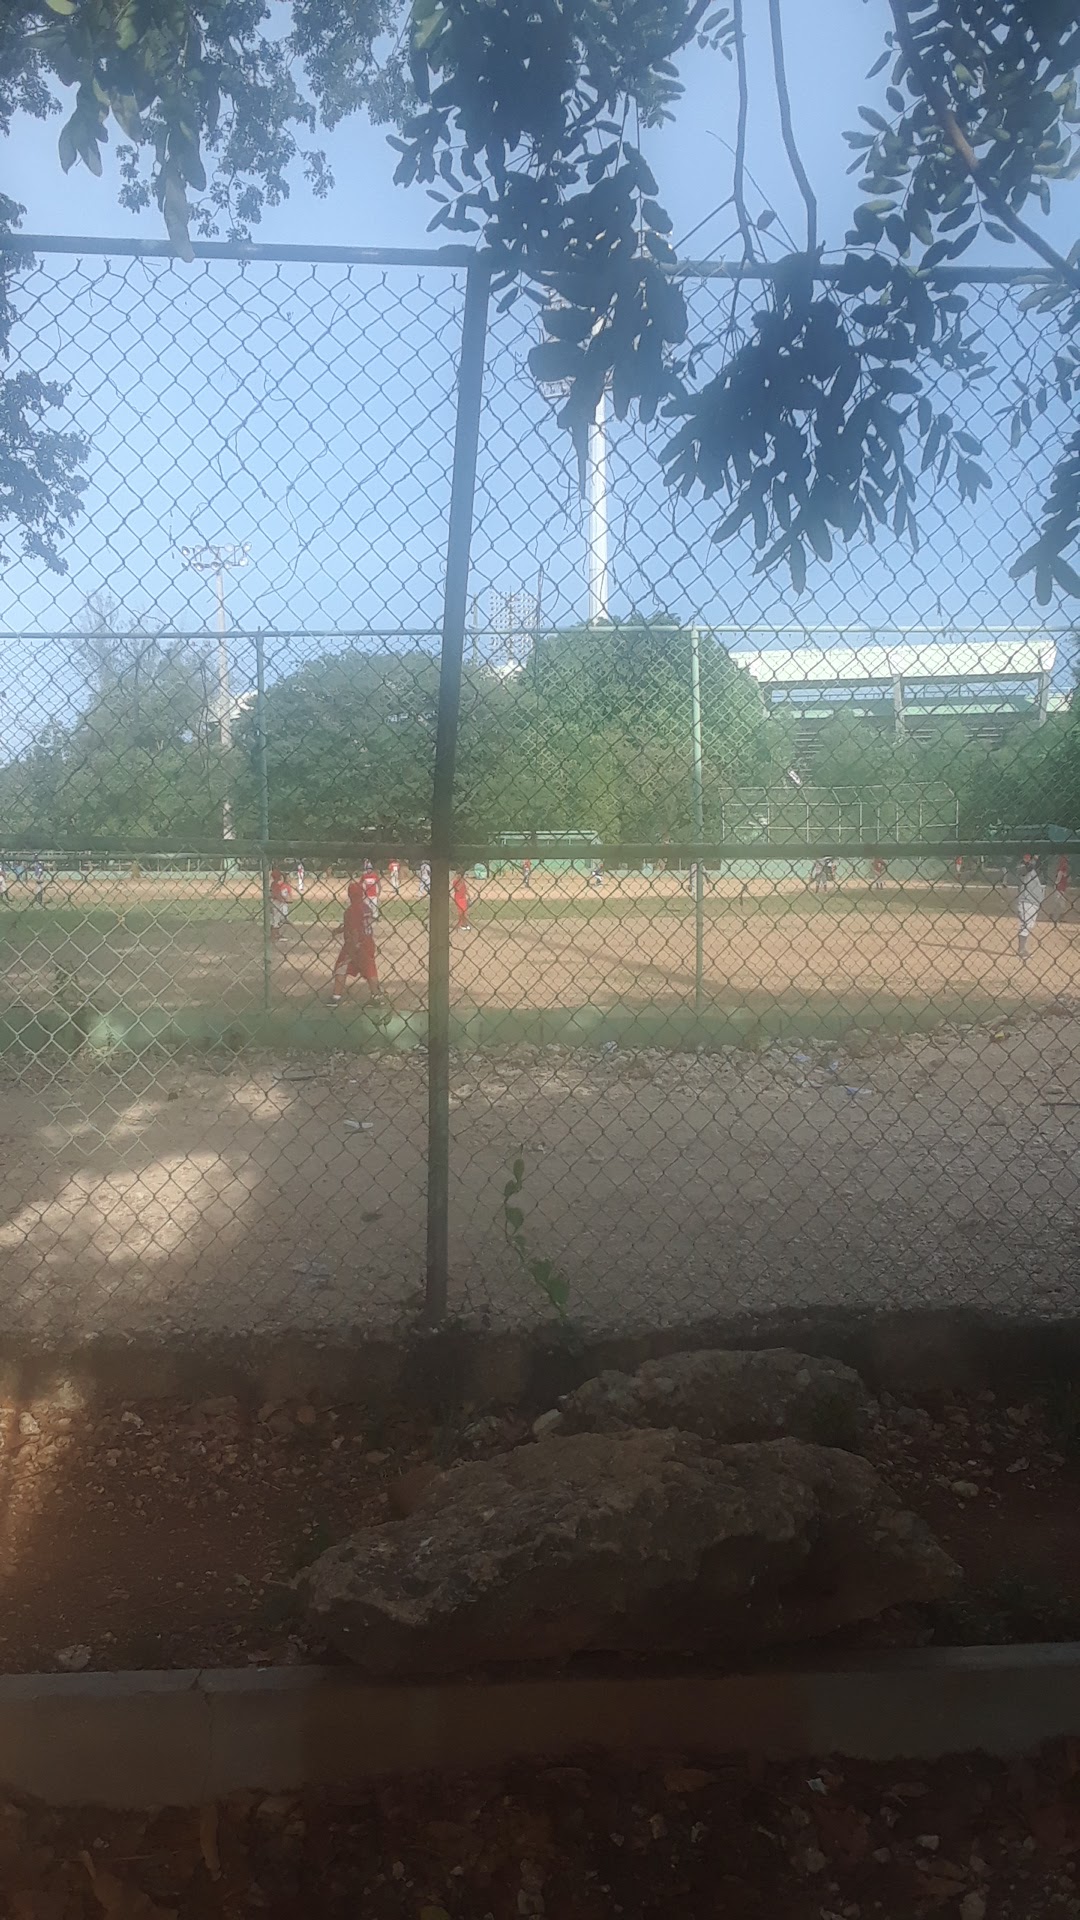 Play de Baseball